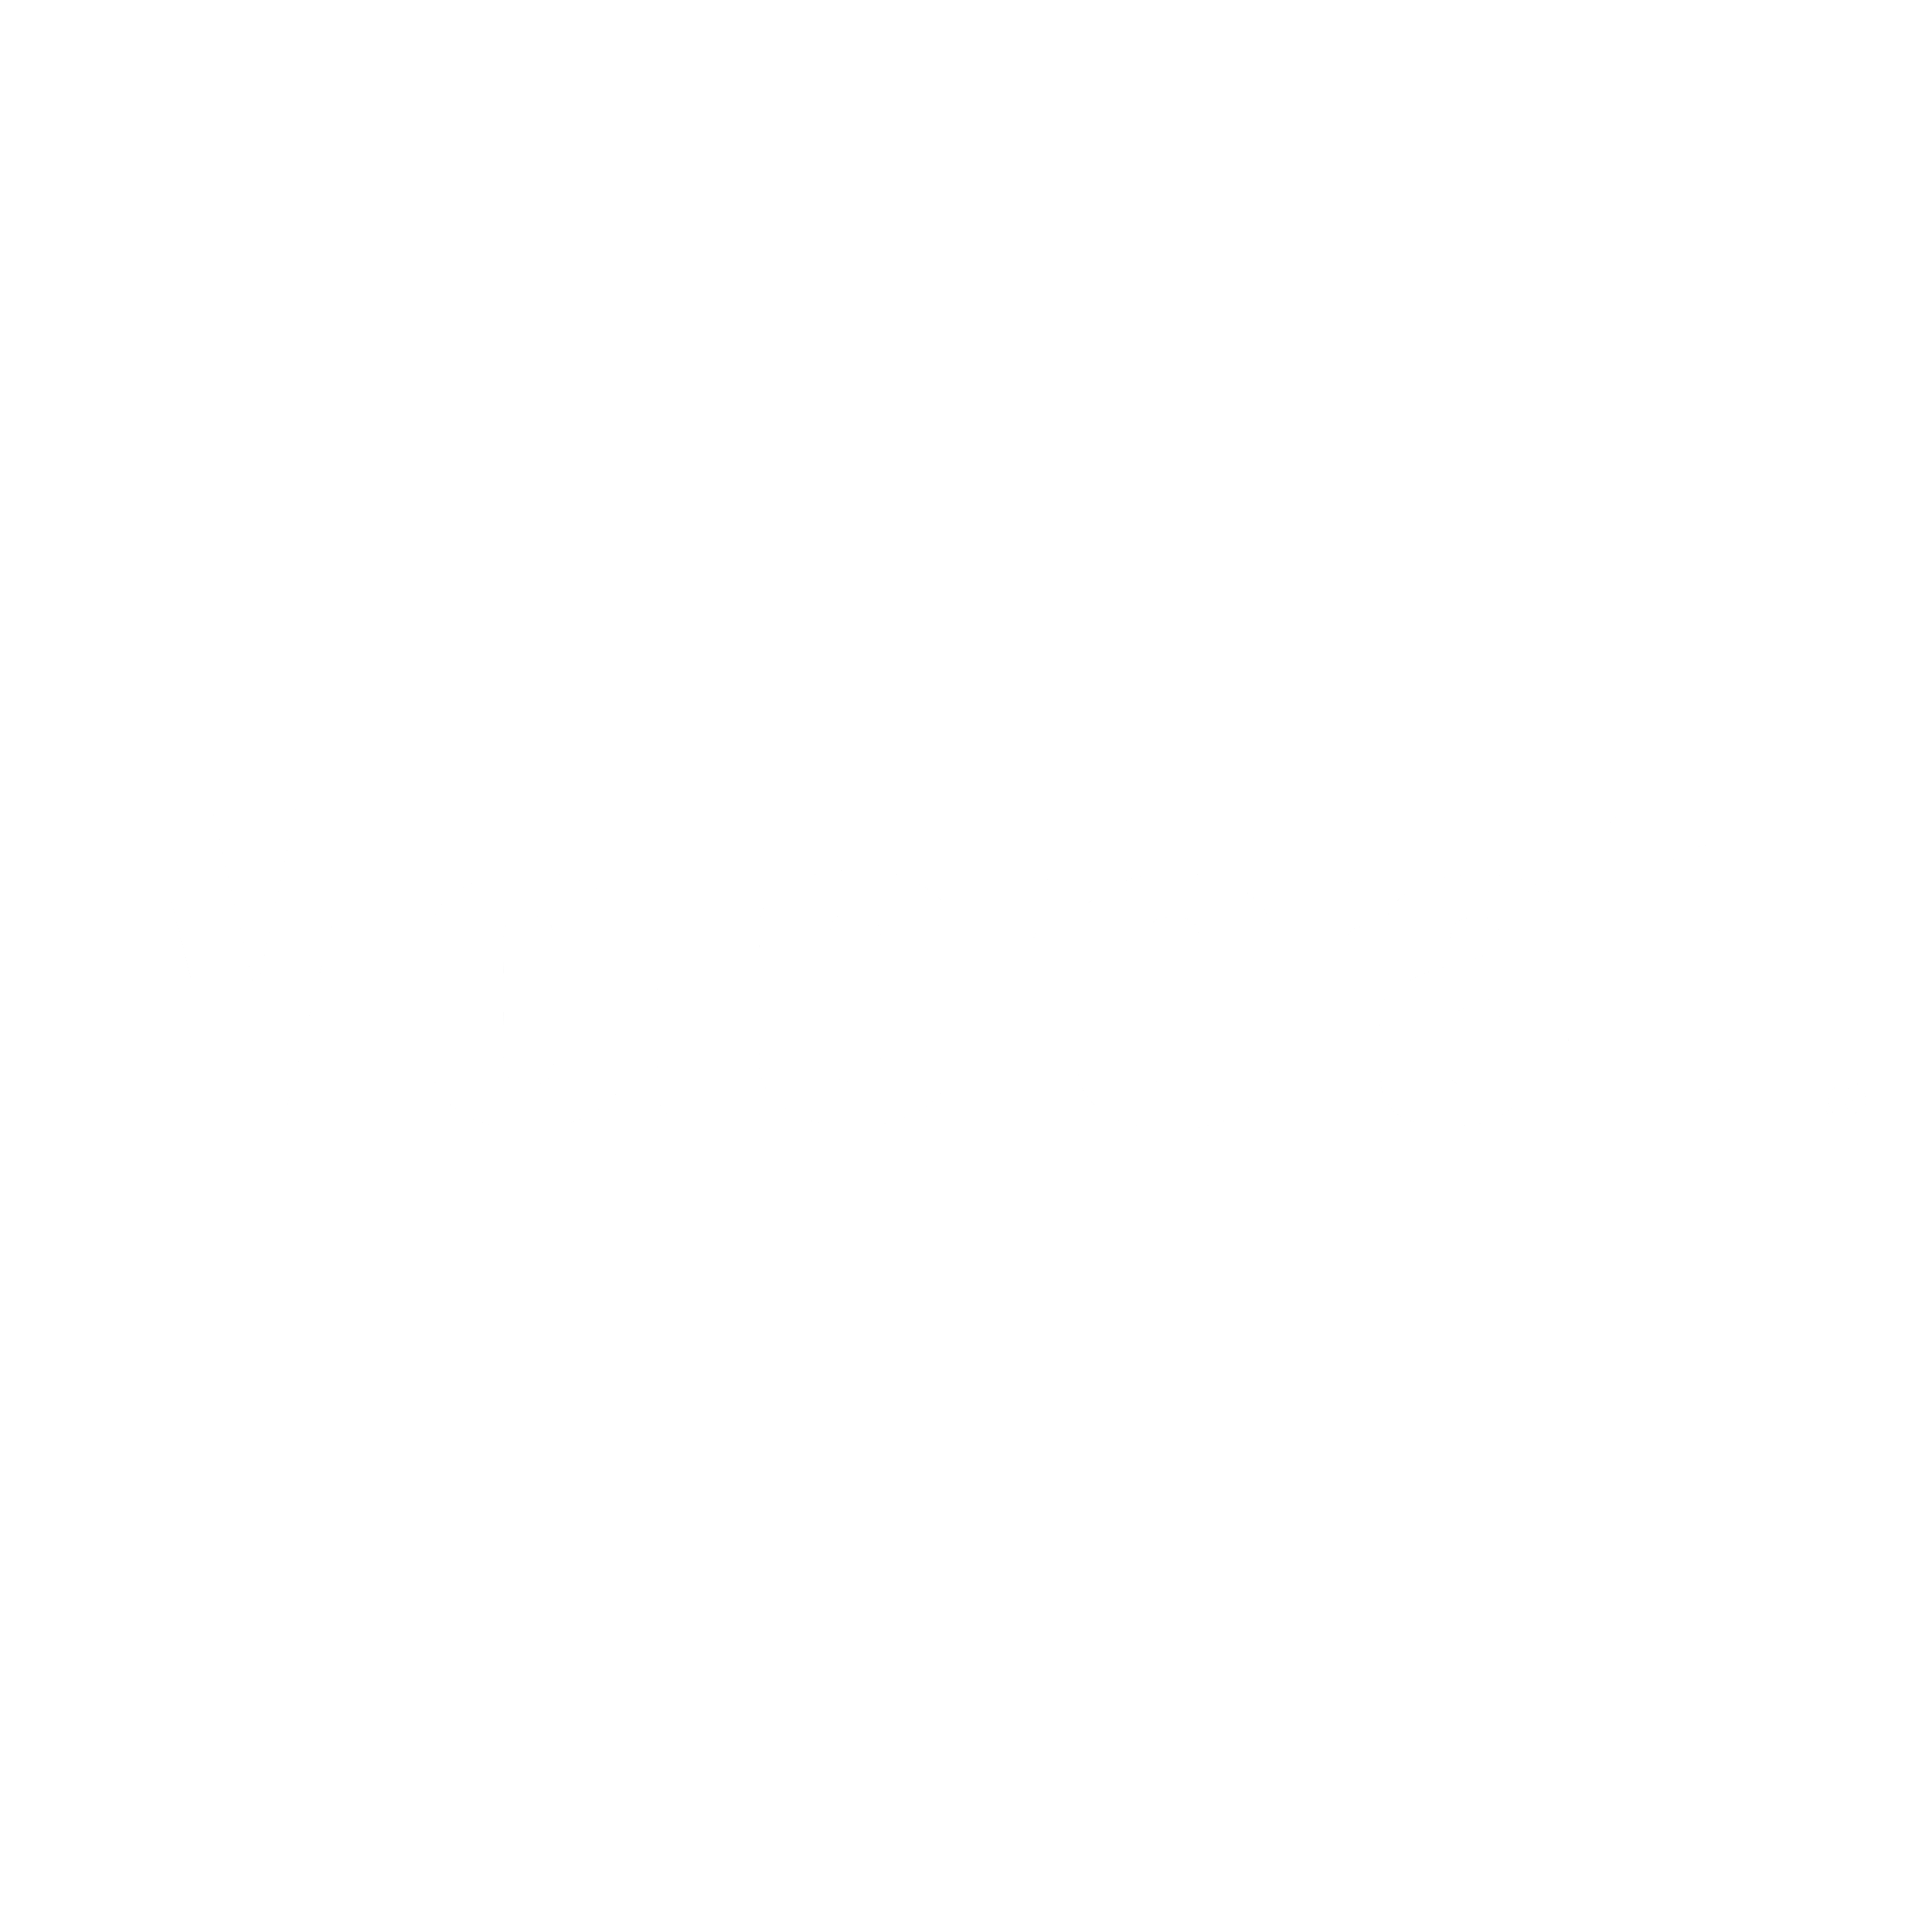 Motorcraft Logo - Motorcraft Logo PNG Transparent & SVG Vector - Freebie Supply